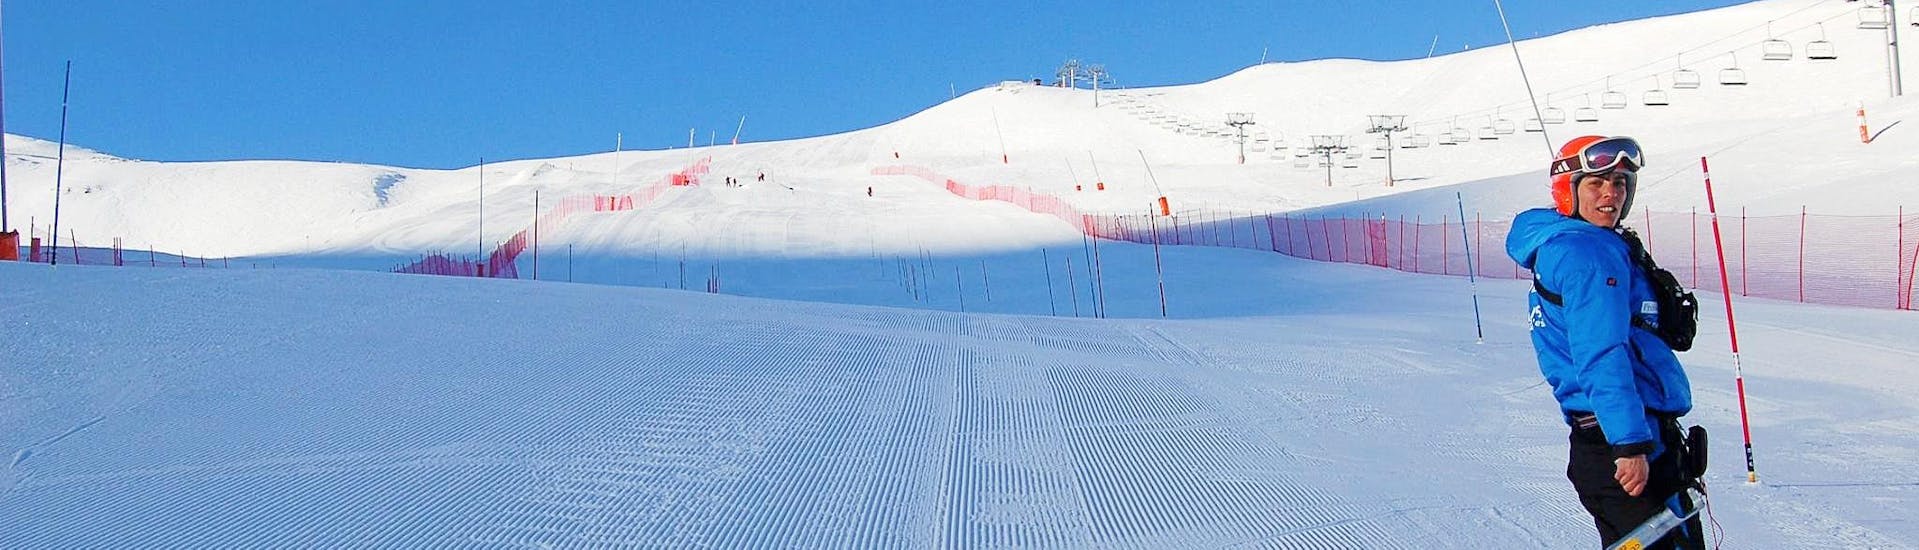 Lezioni di sci per adulti a partire da 18 anni per tutti i livelli.